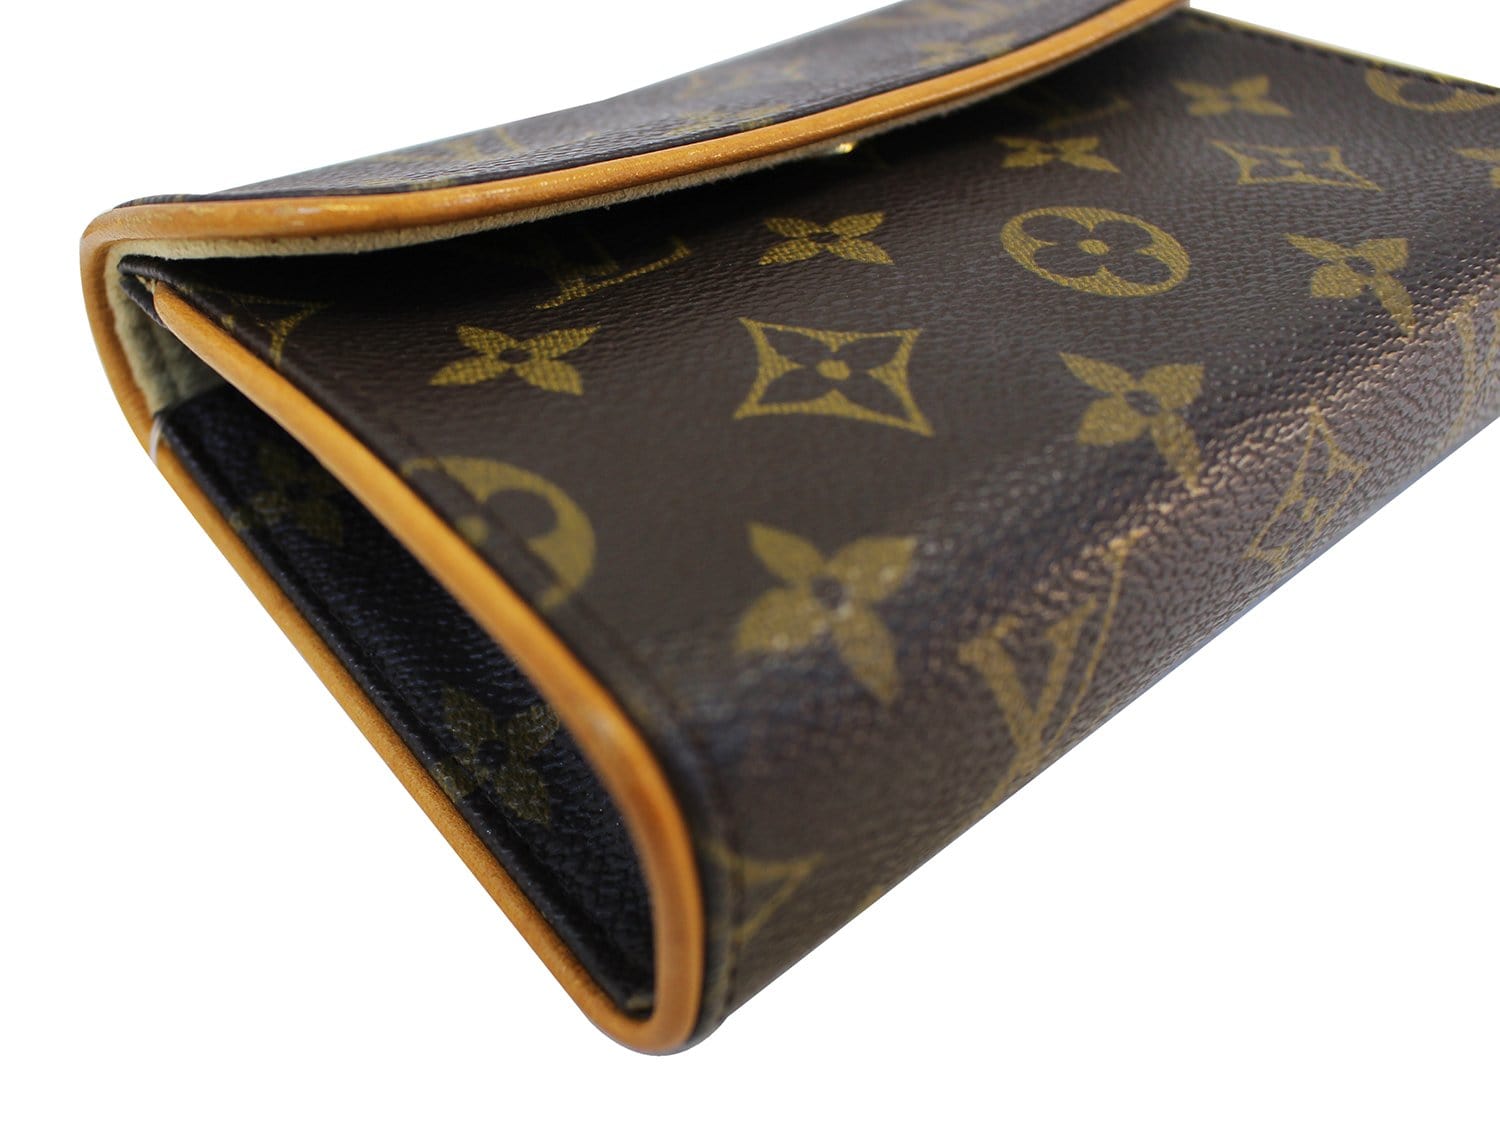 Louis Vuitton 2003 pre-owned Monogram Florentine belt bag, Brown